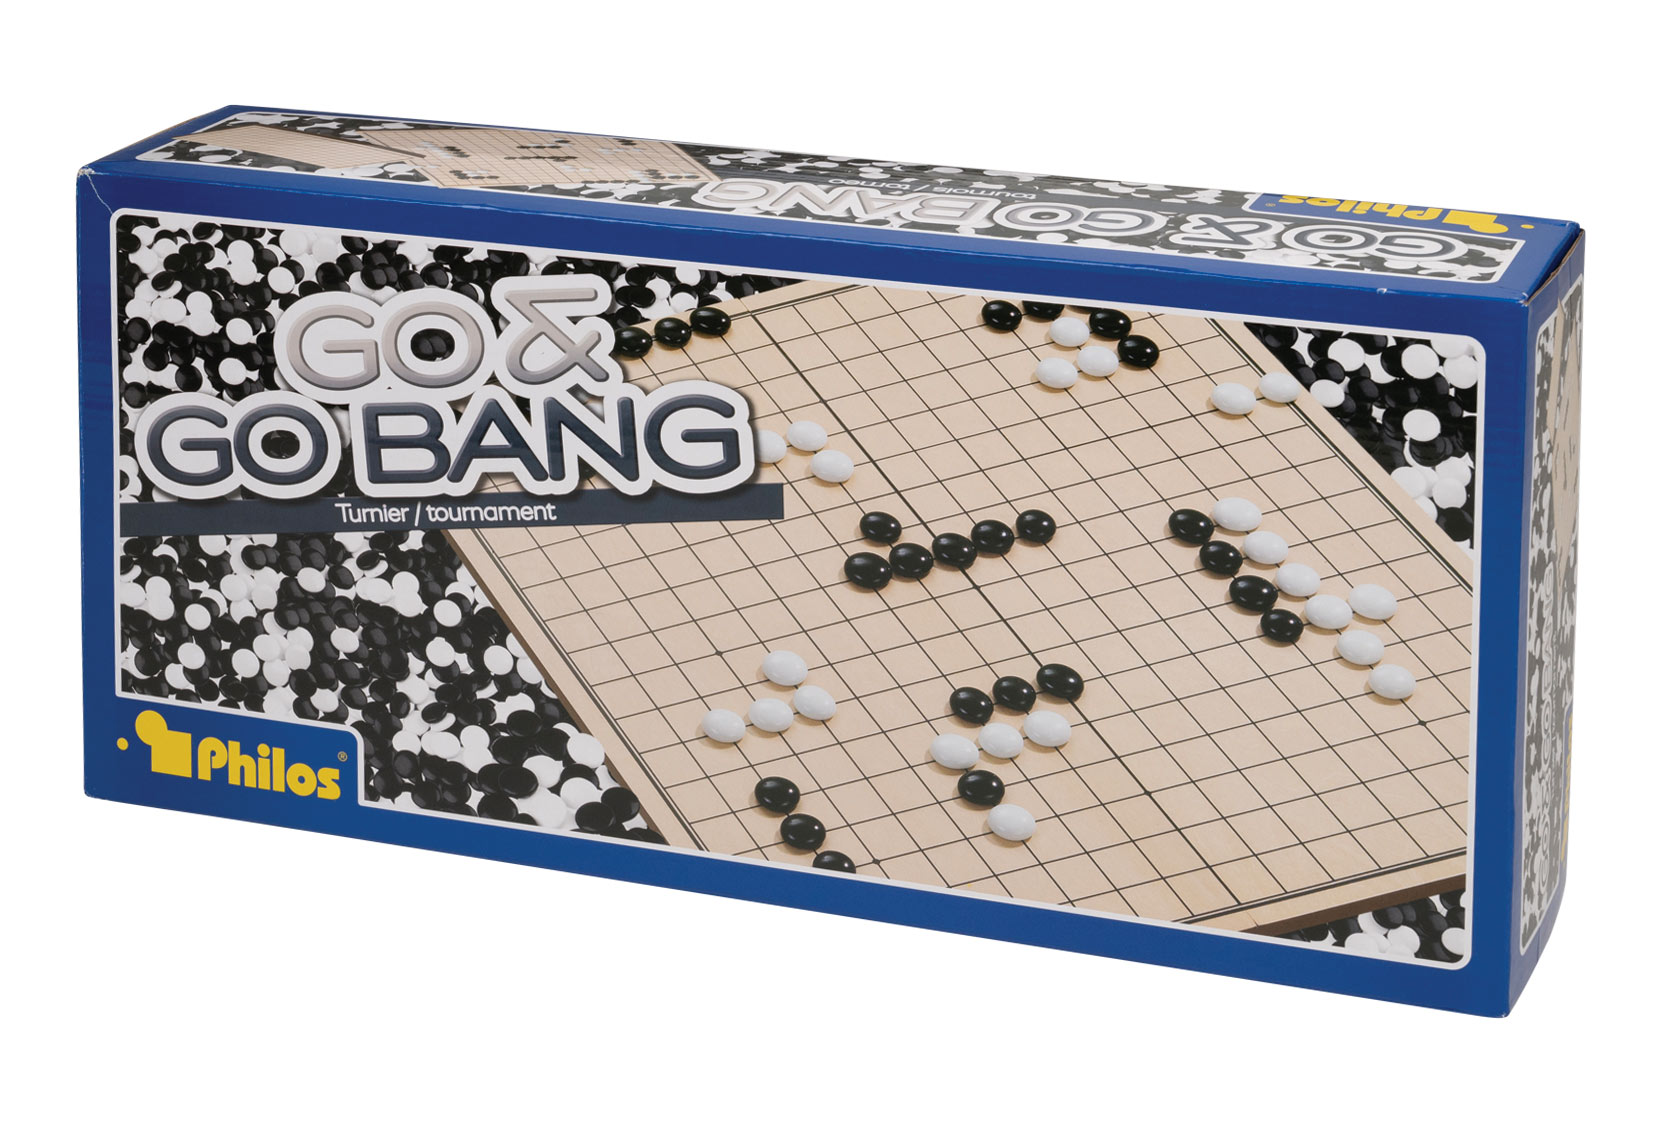 Go & Go Bang, set, tournament, game board foldable